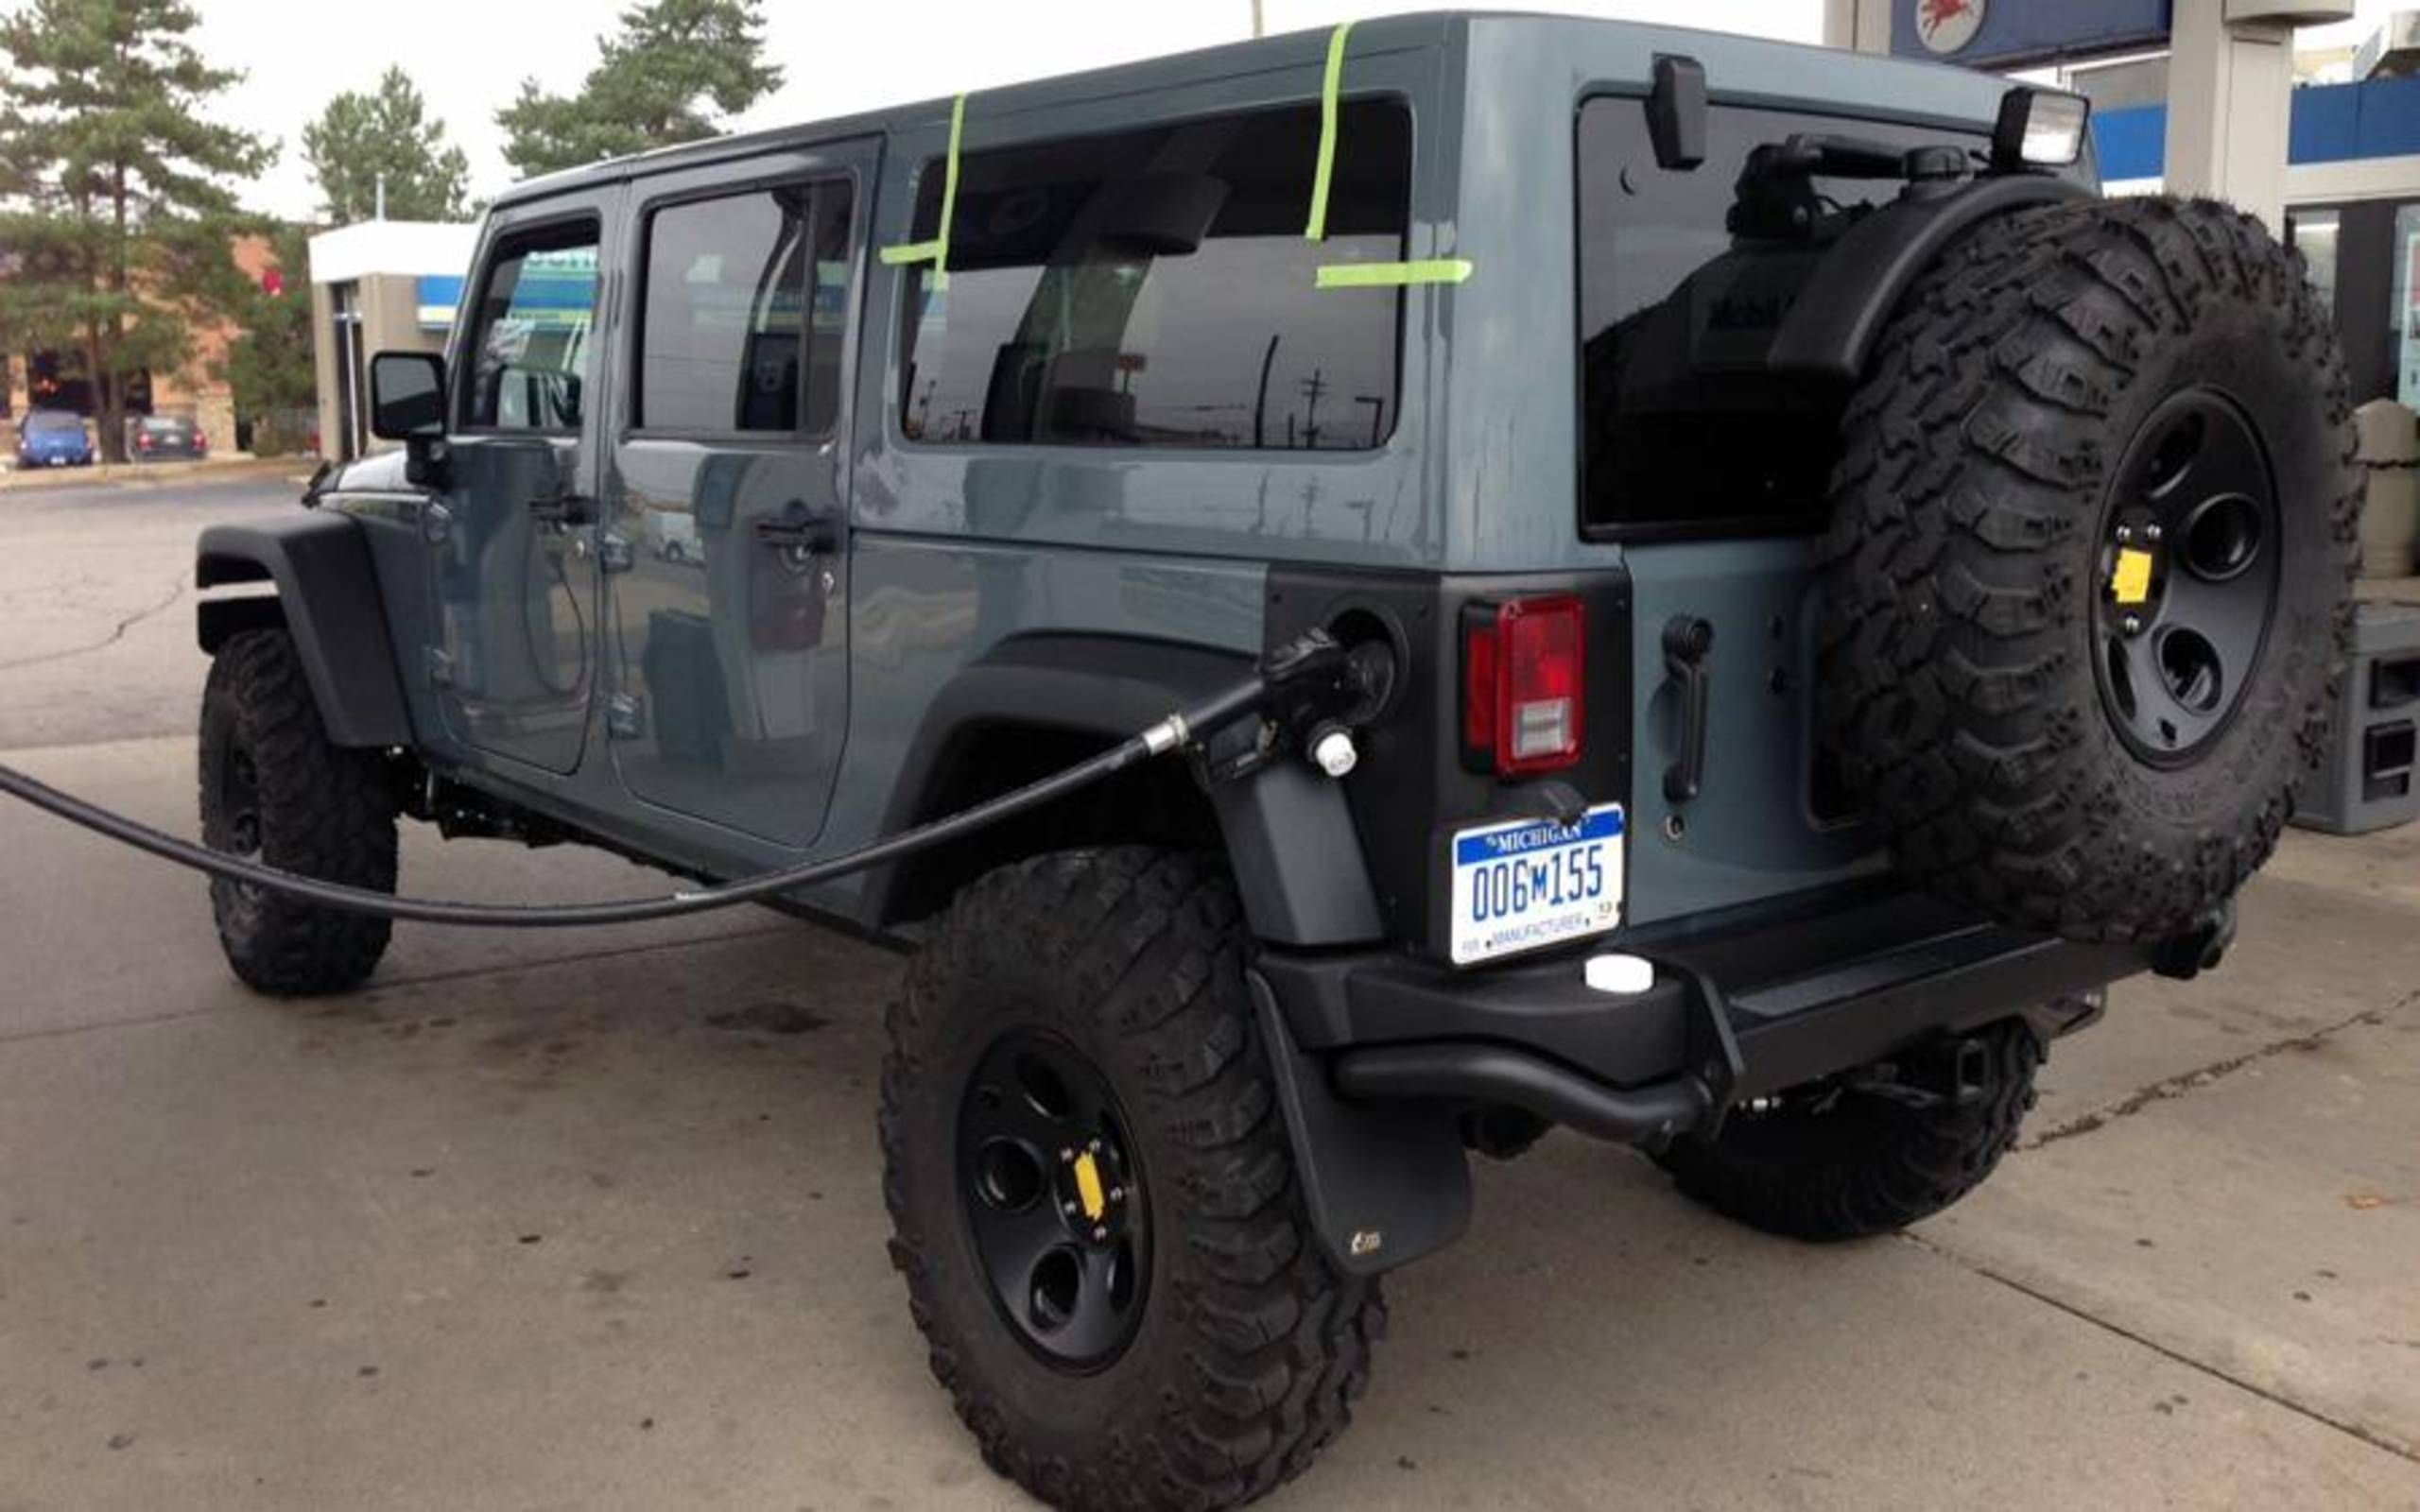 Long-wheelbase stretch Jeep Wrangler spied